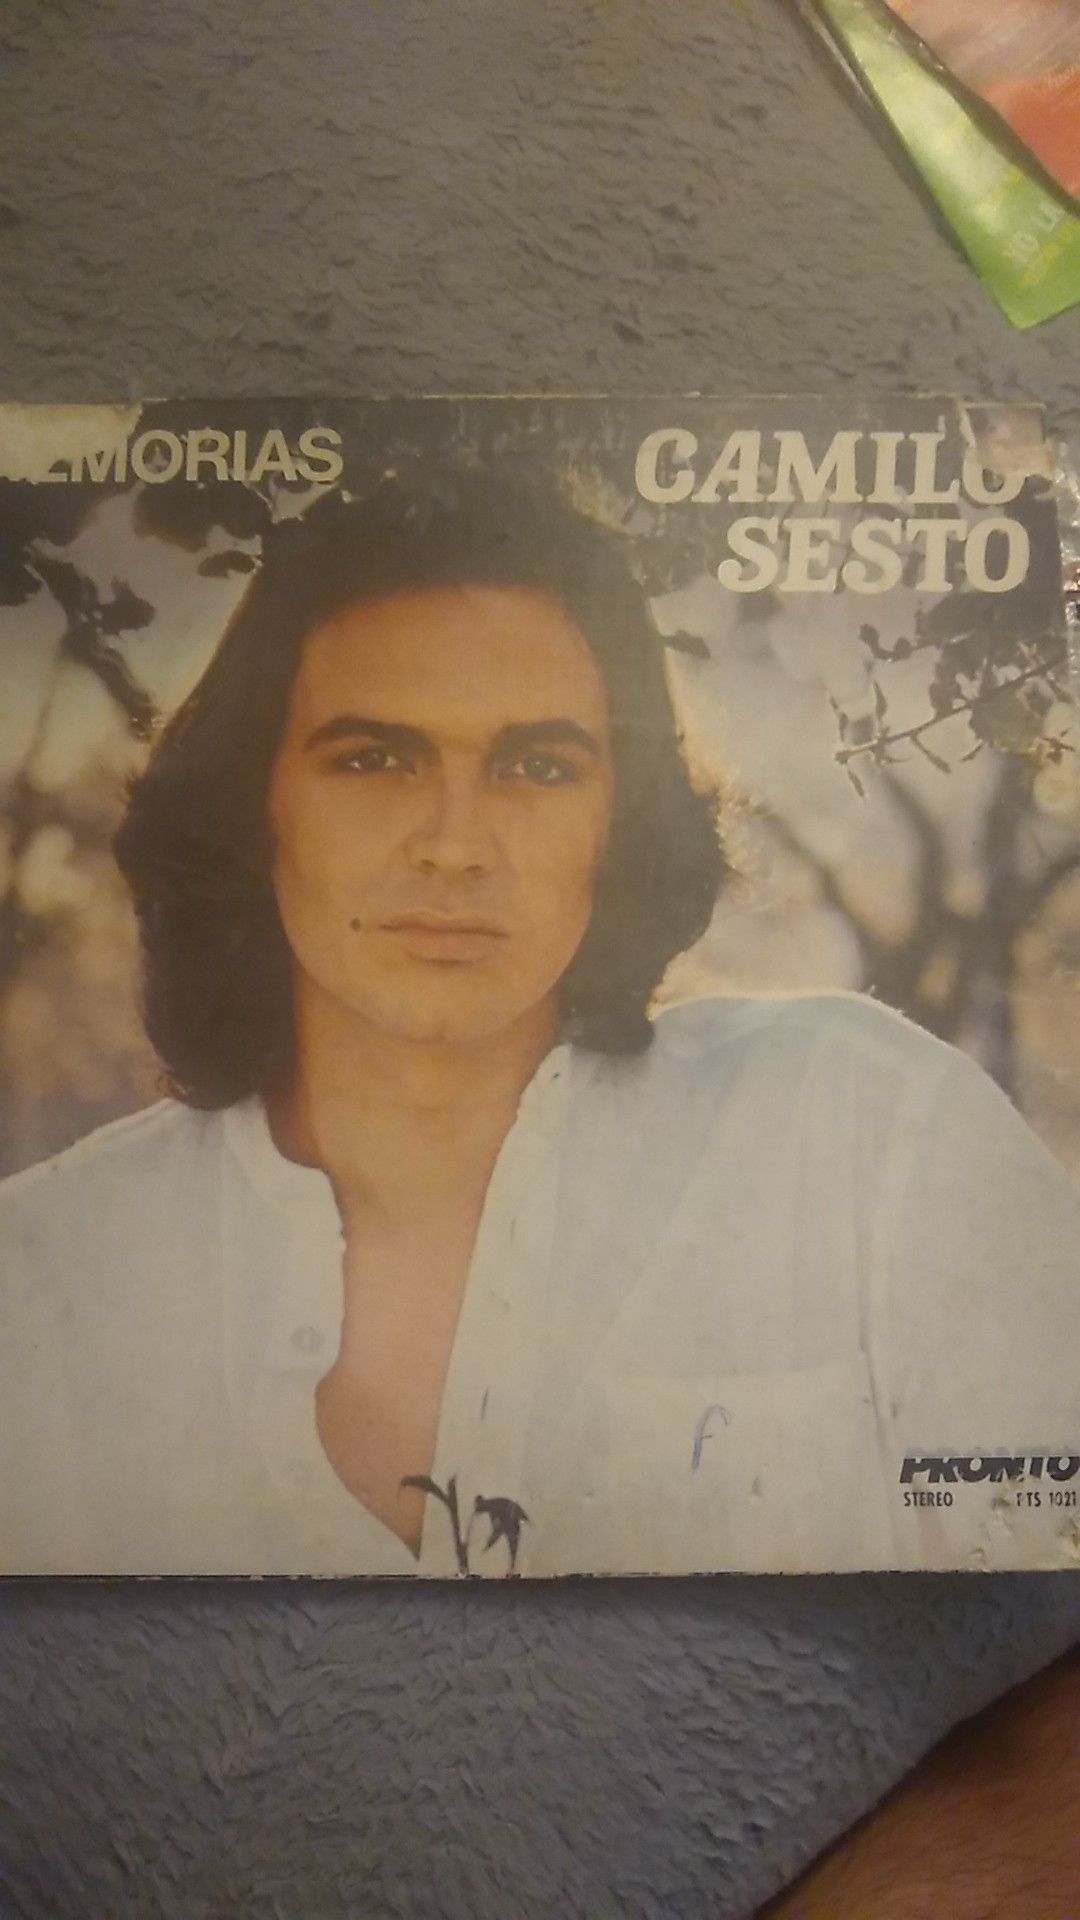 Camilo Sesto - memorias